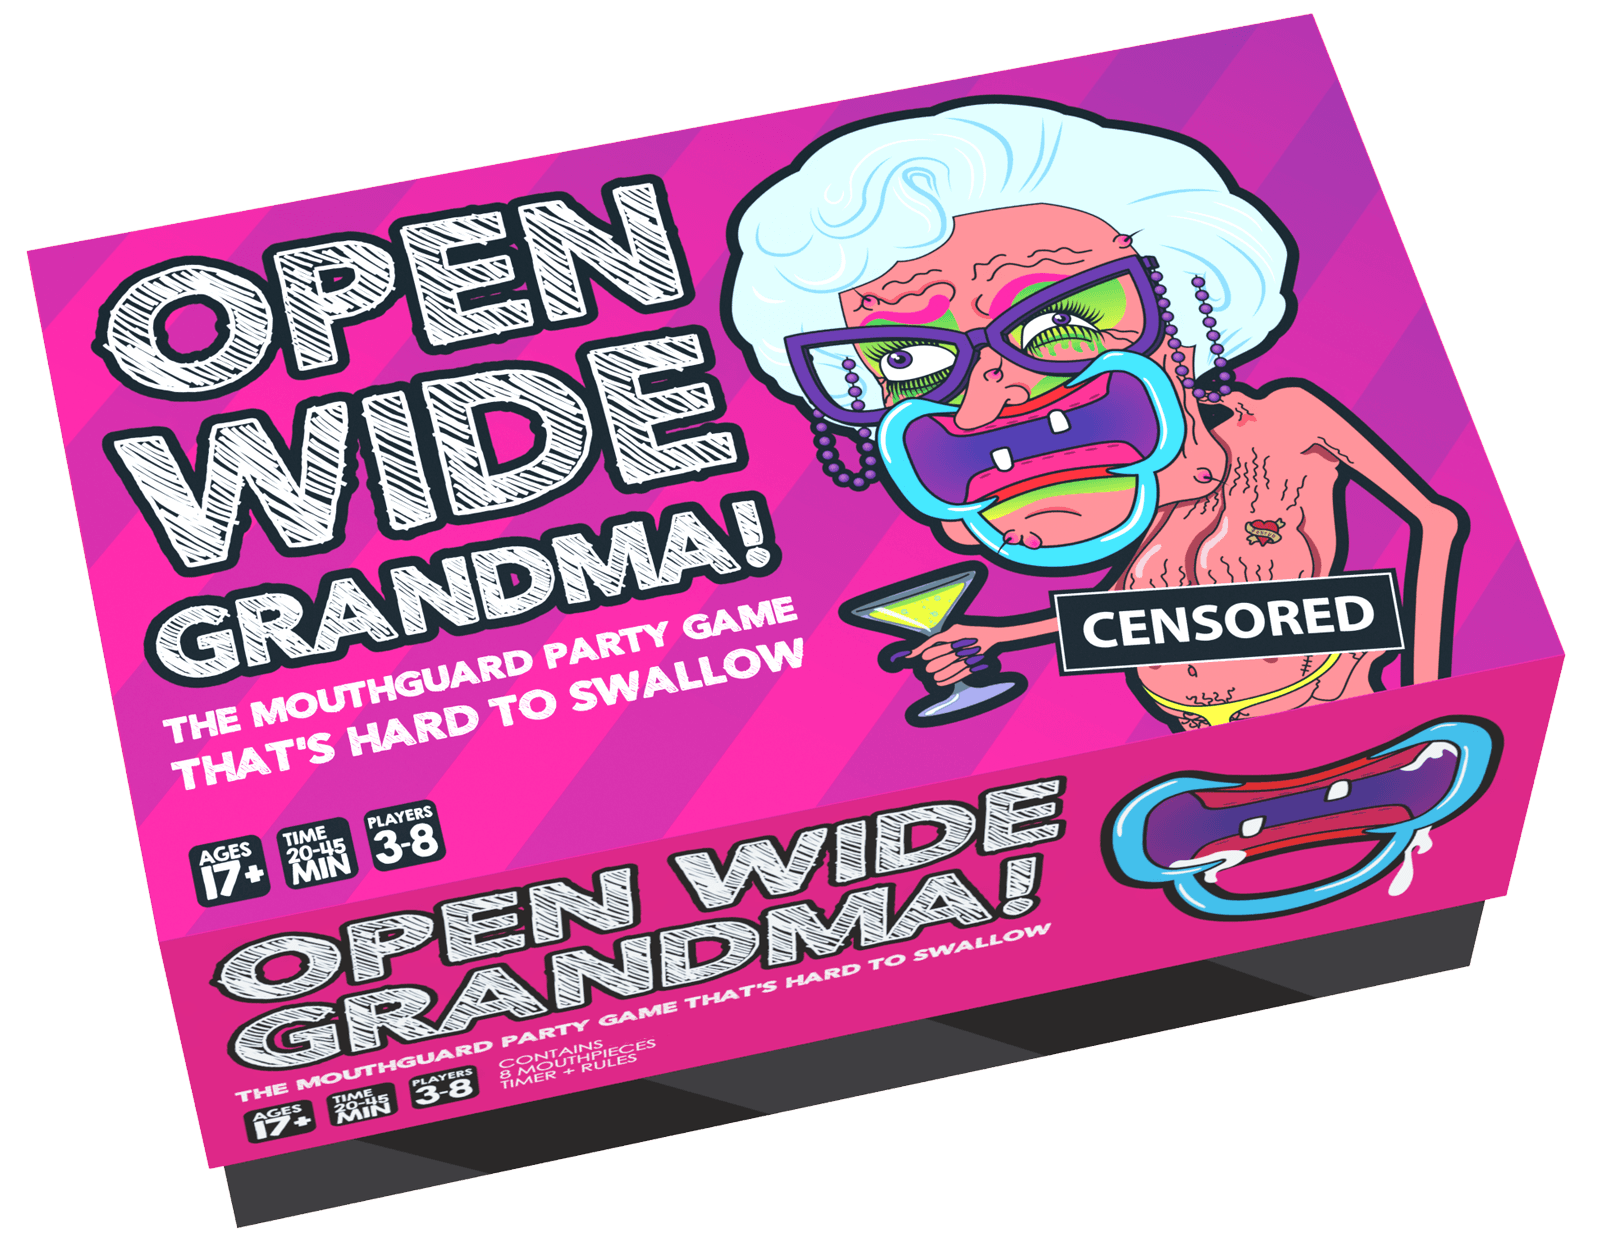 Open Wide Grandma